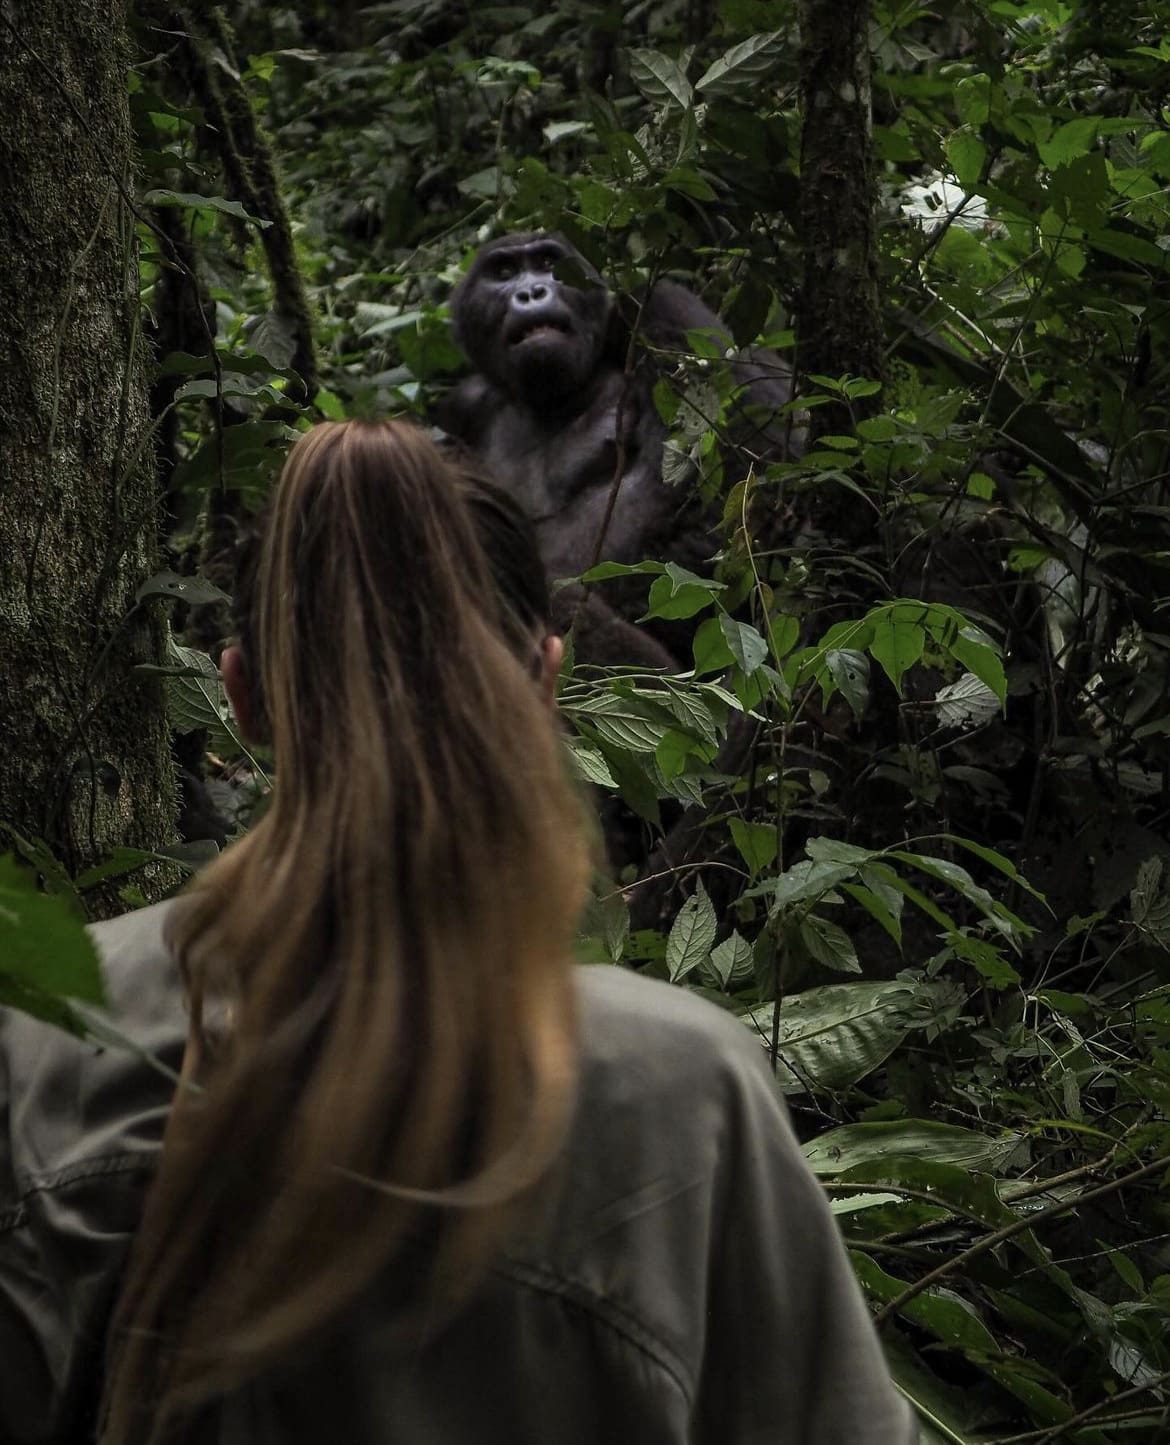 Trekking with gorillas in Uganda